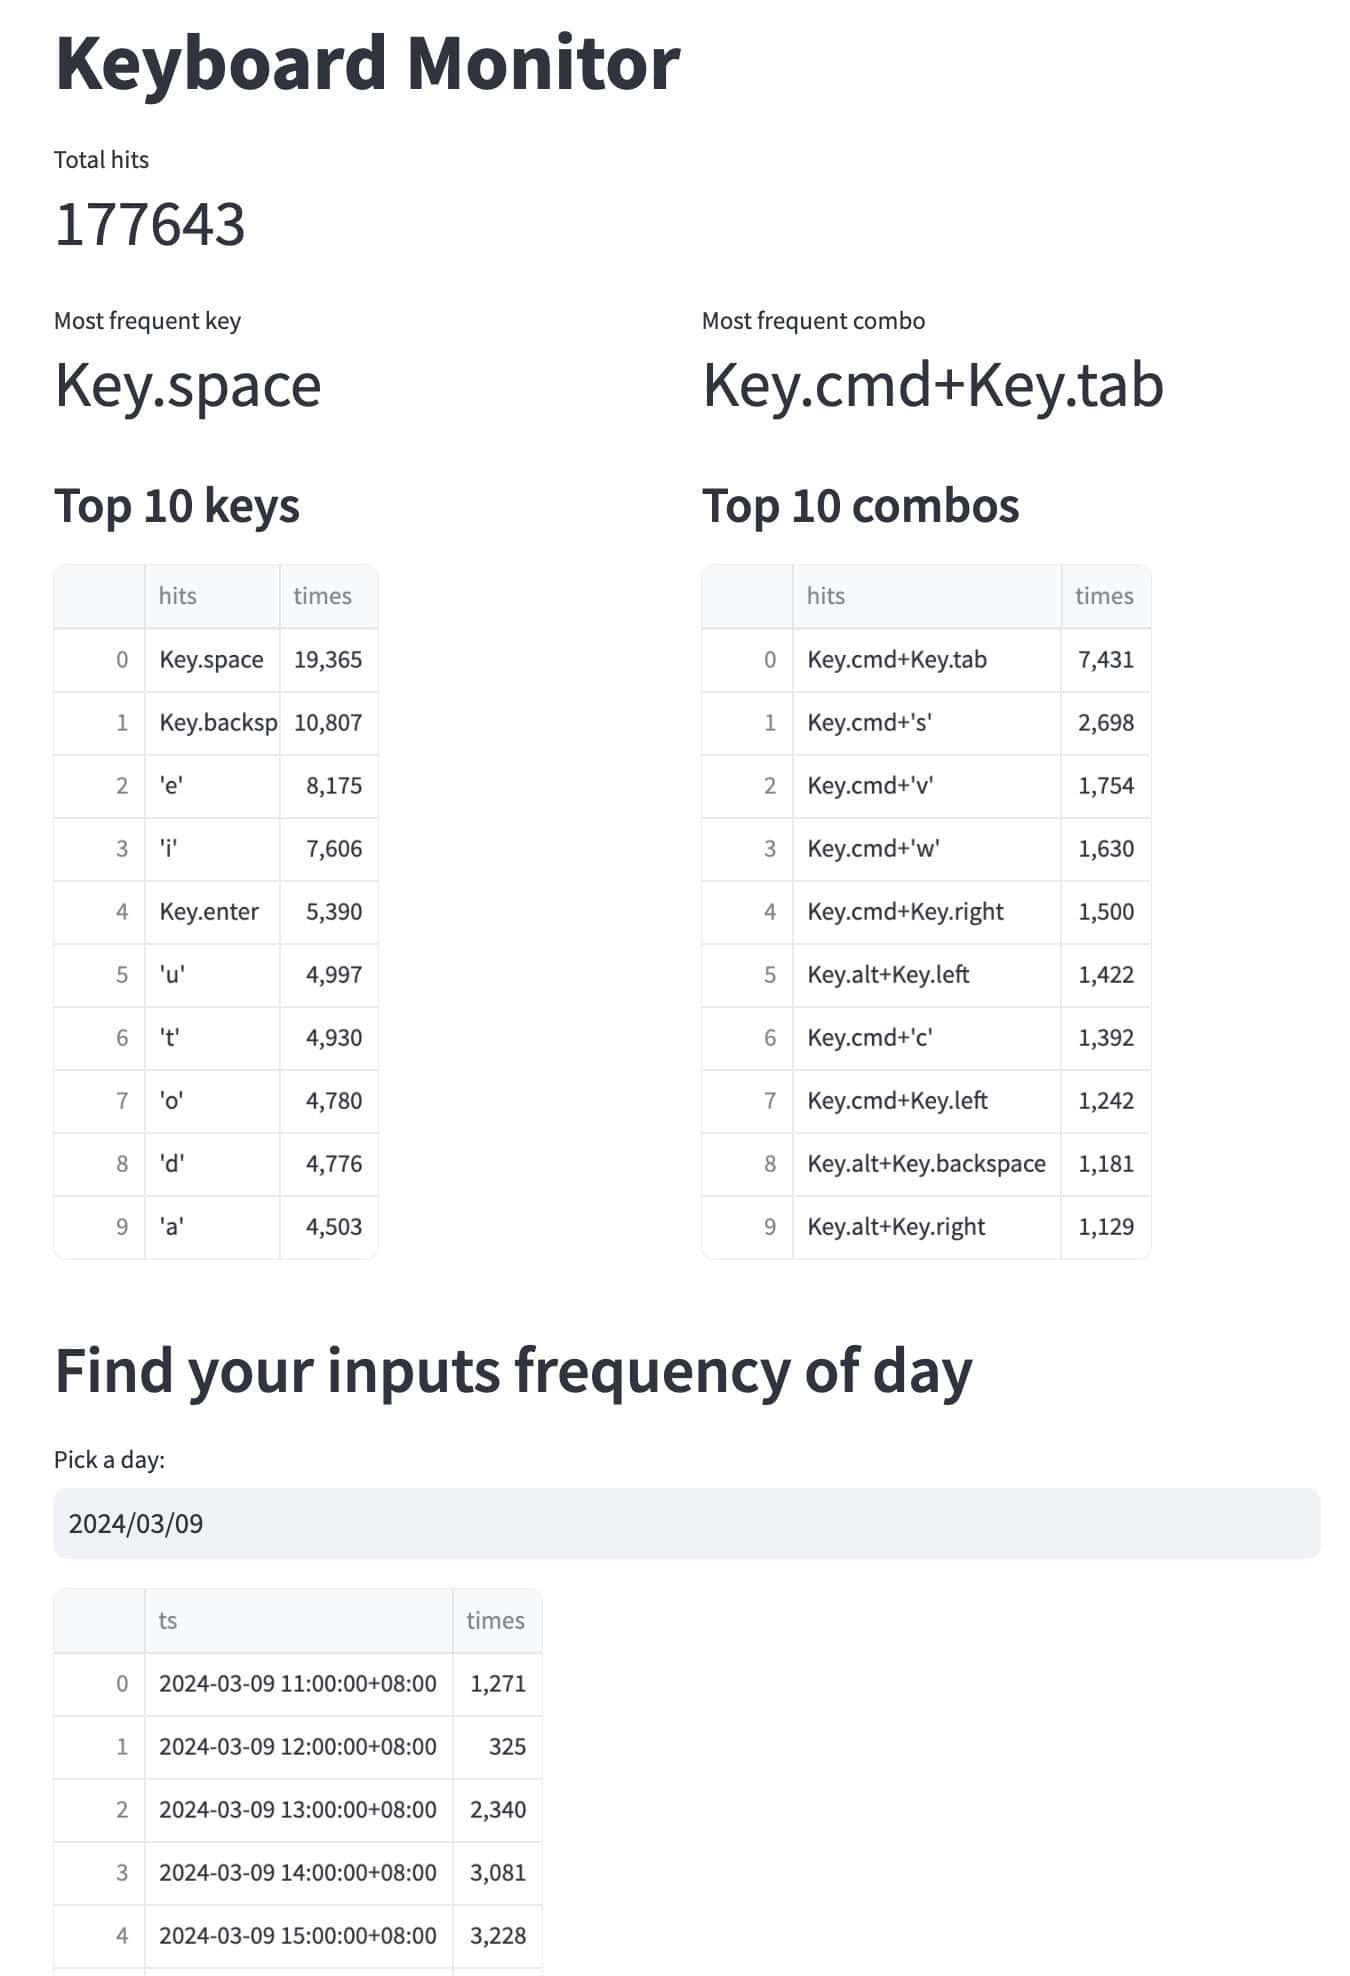 Keyboard Monitor total hits report